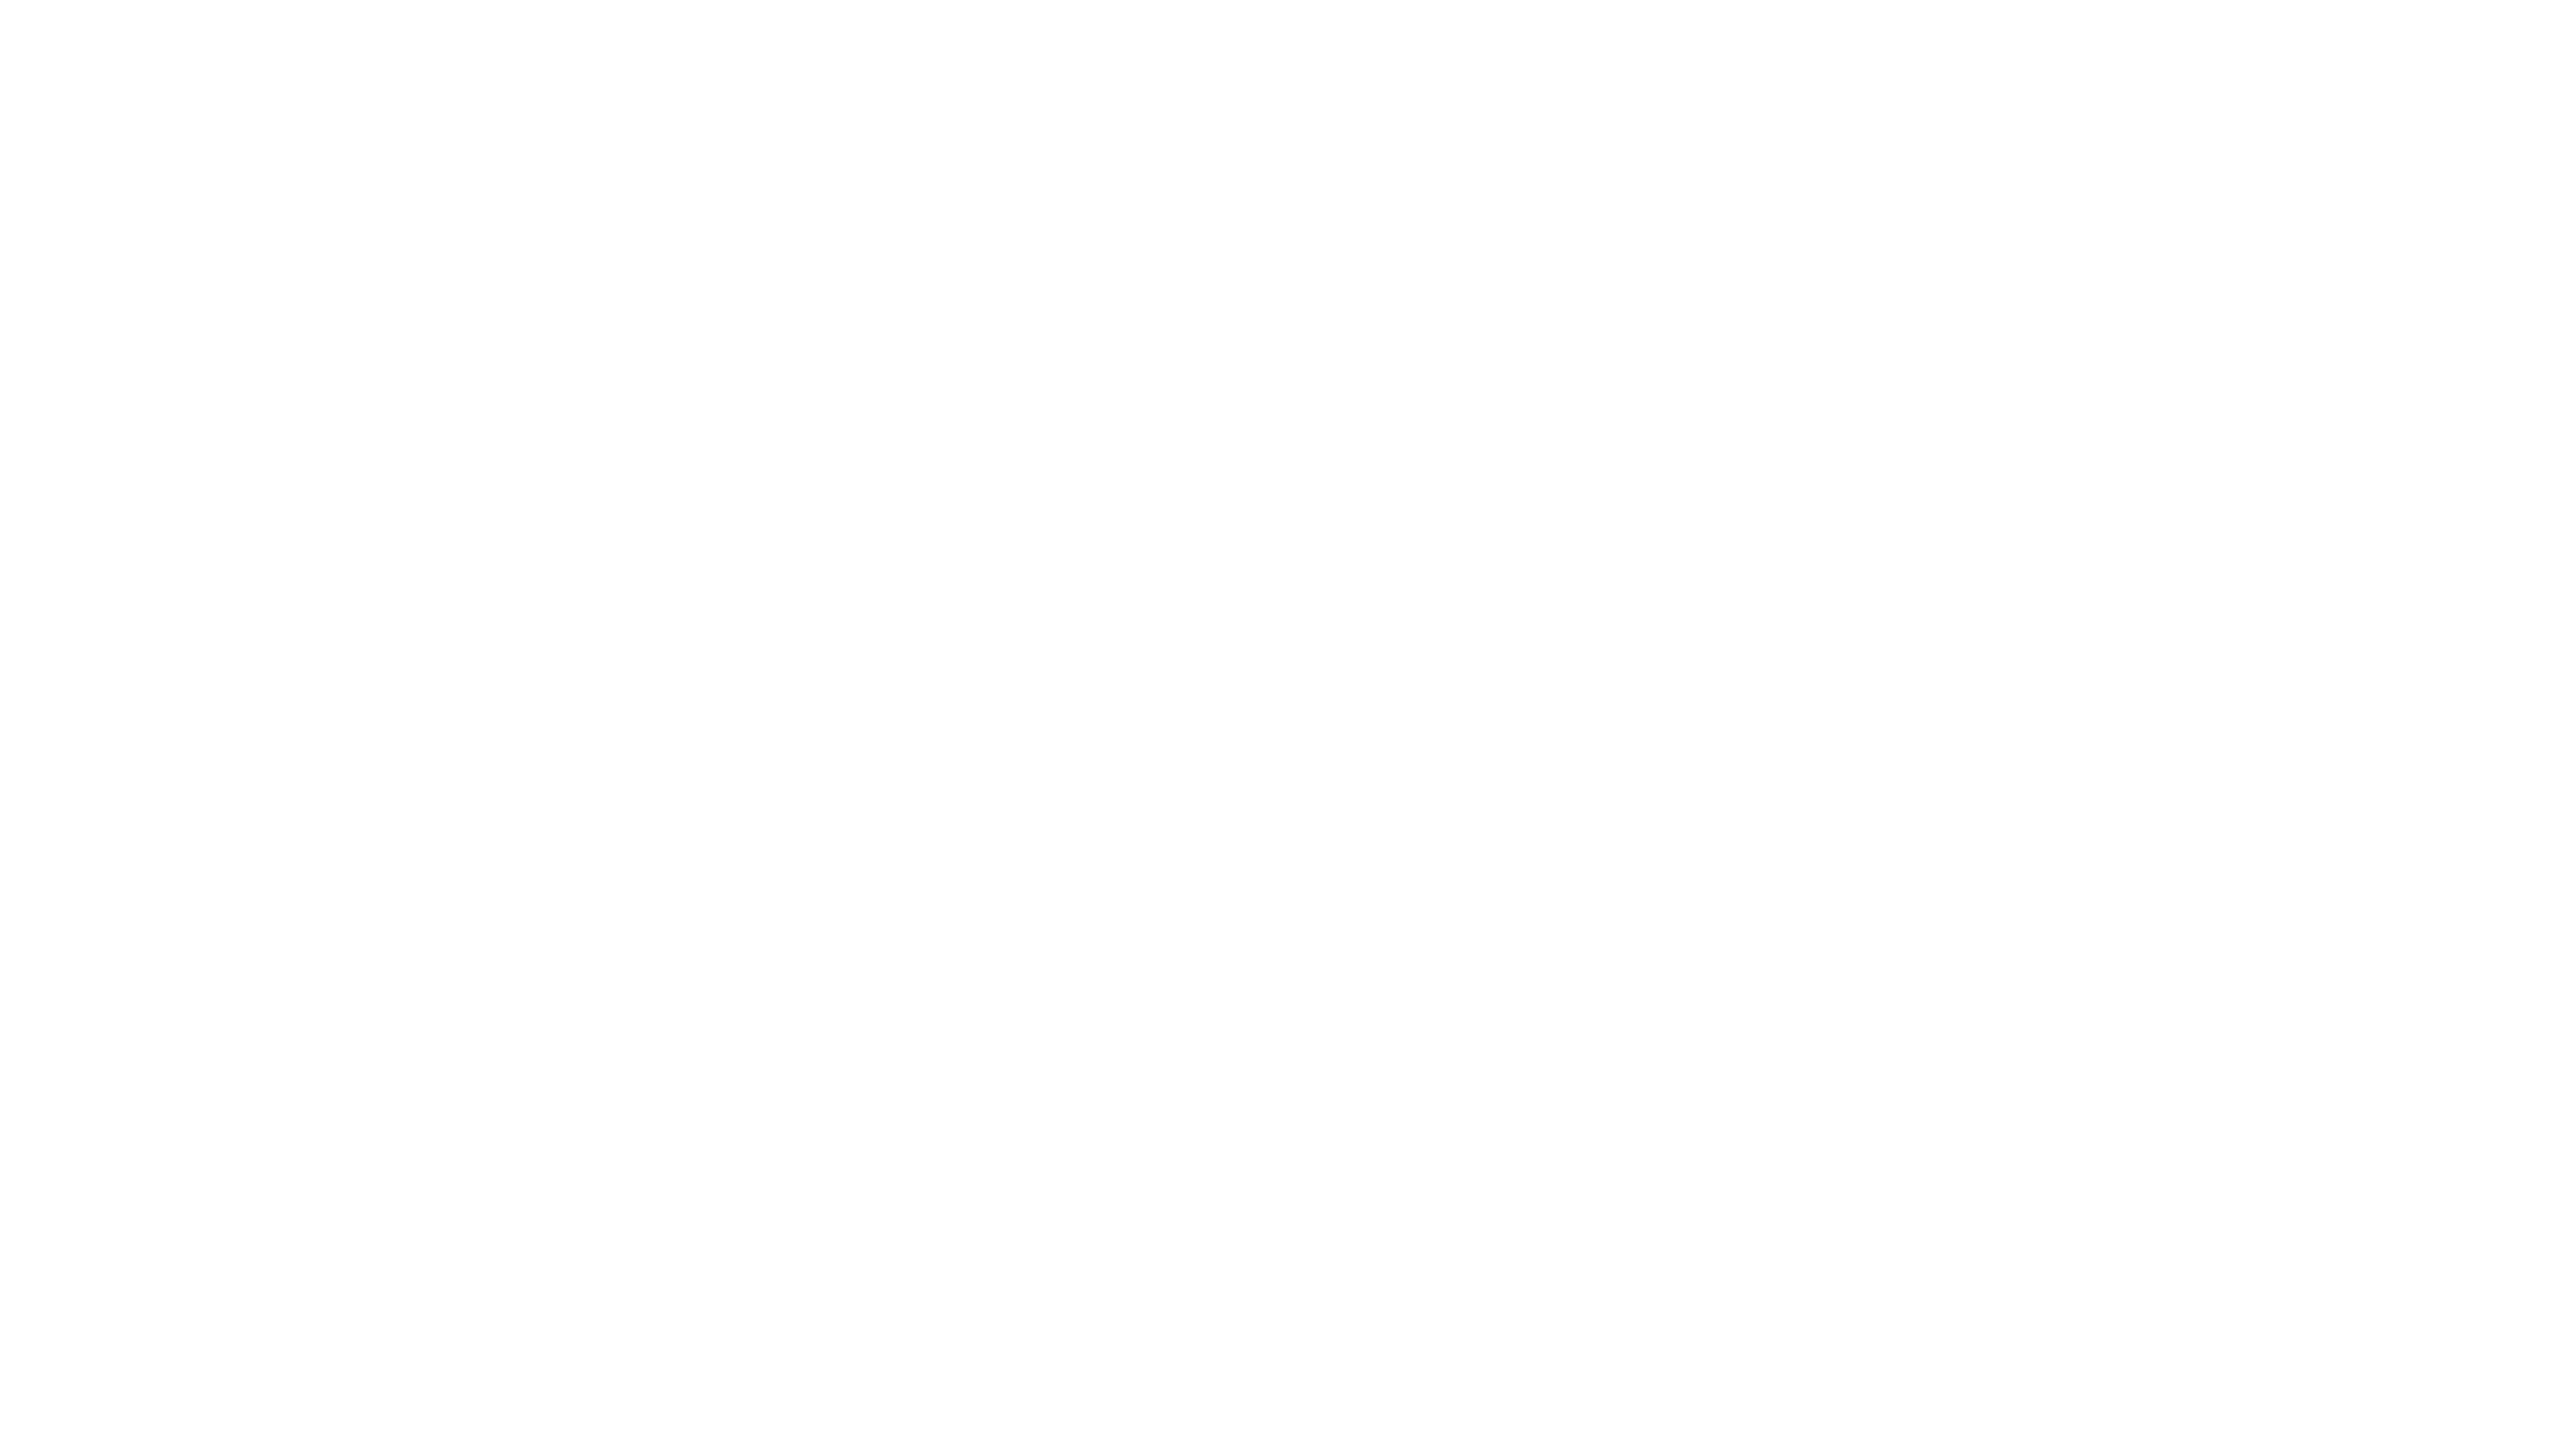 premier league logo white